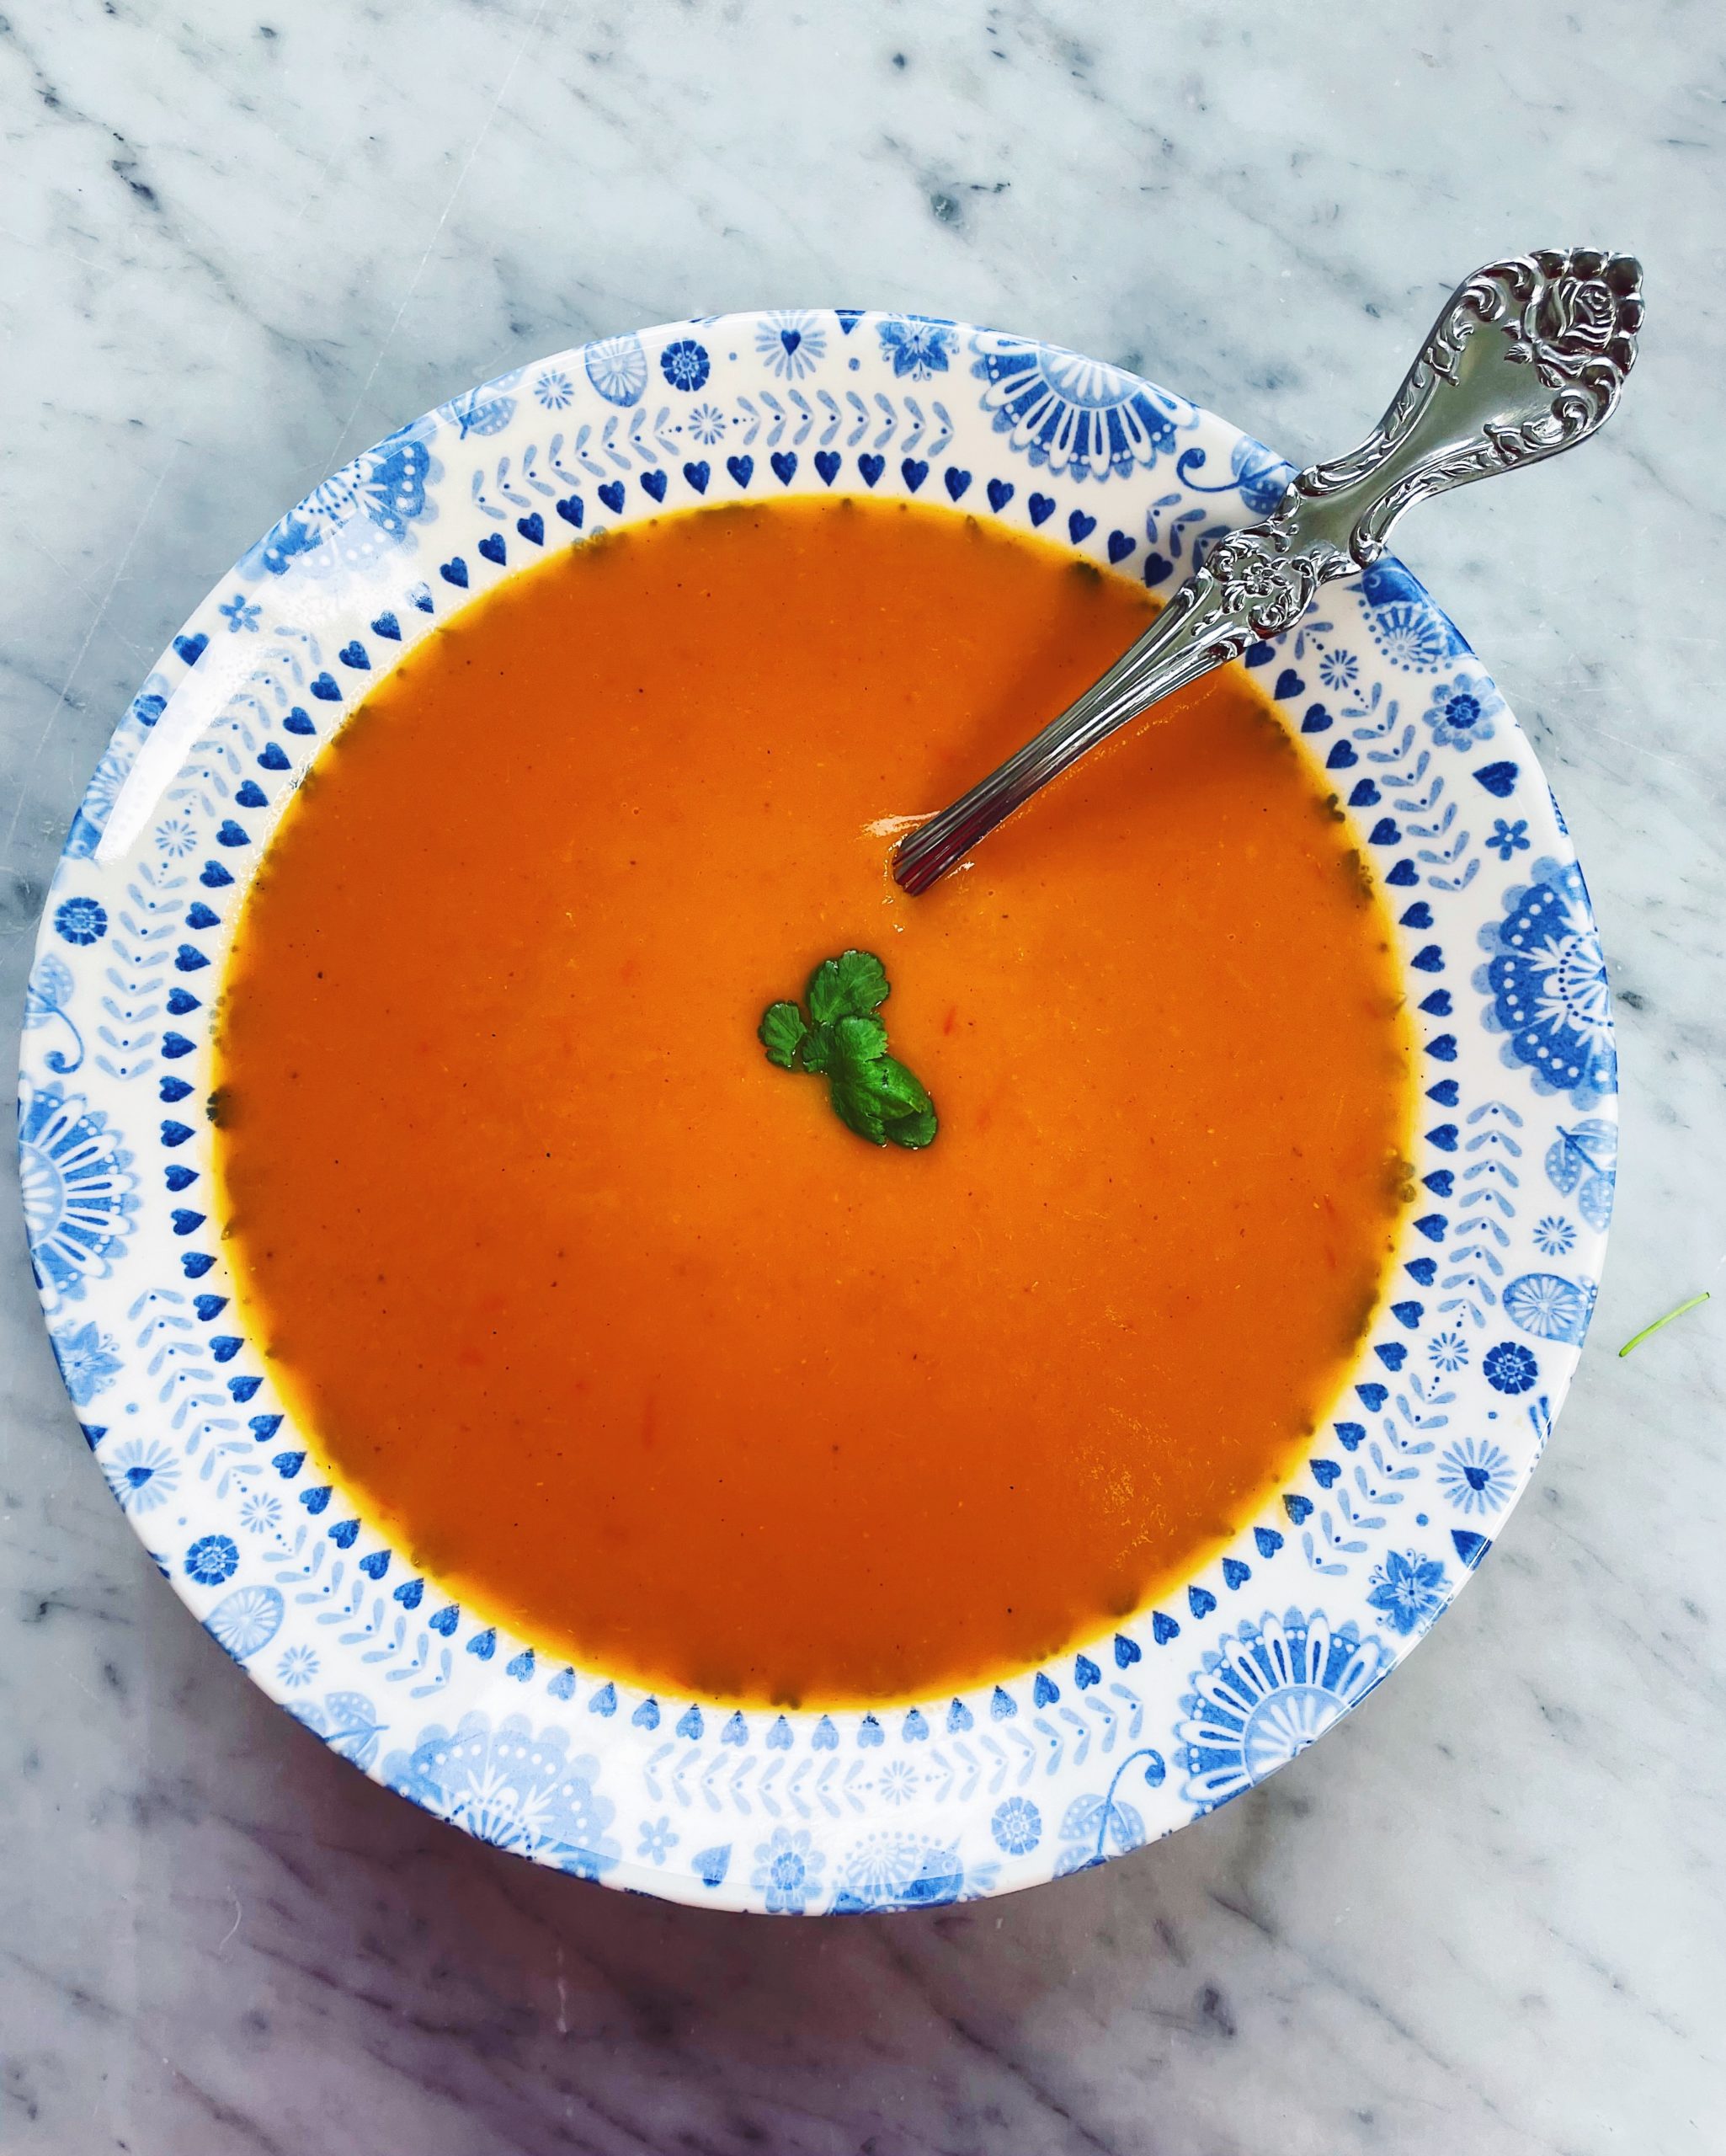 Vegetable Soup Recipe